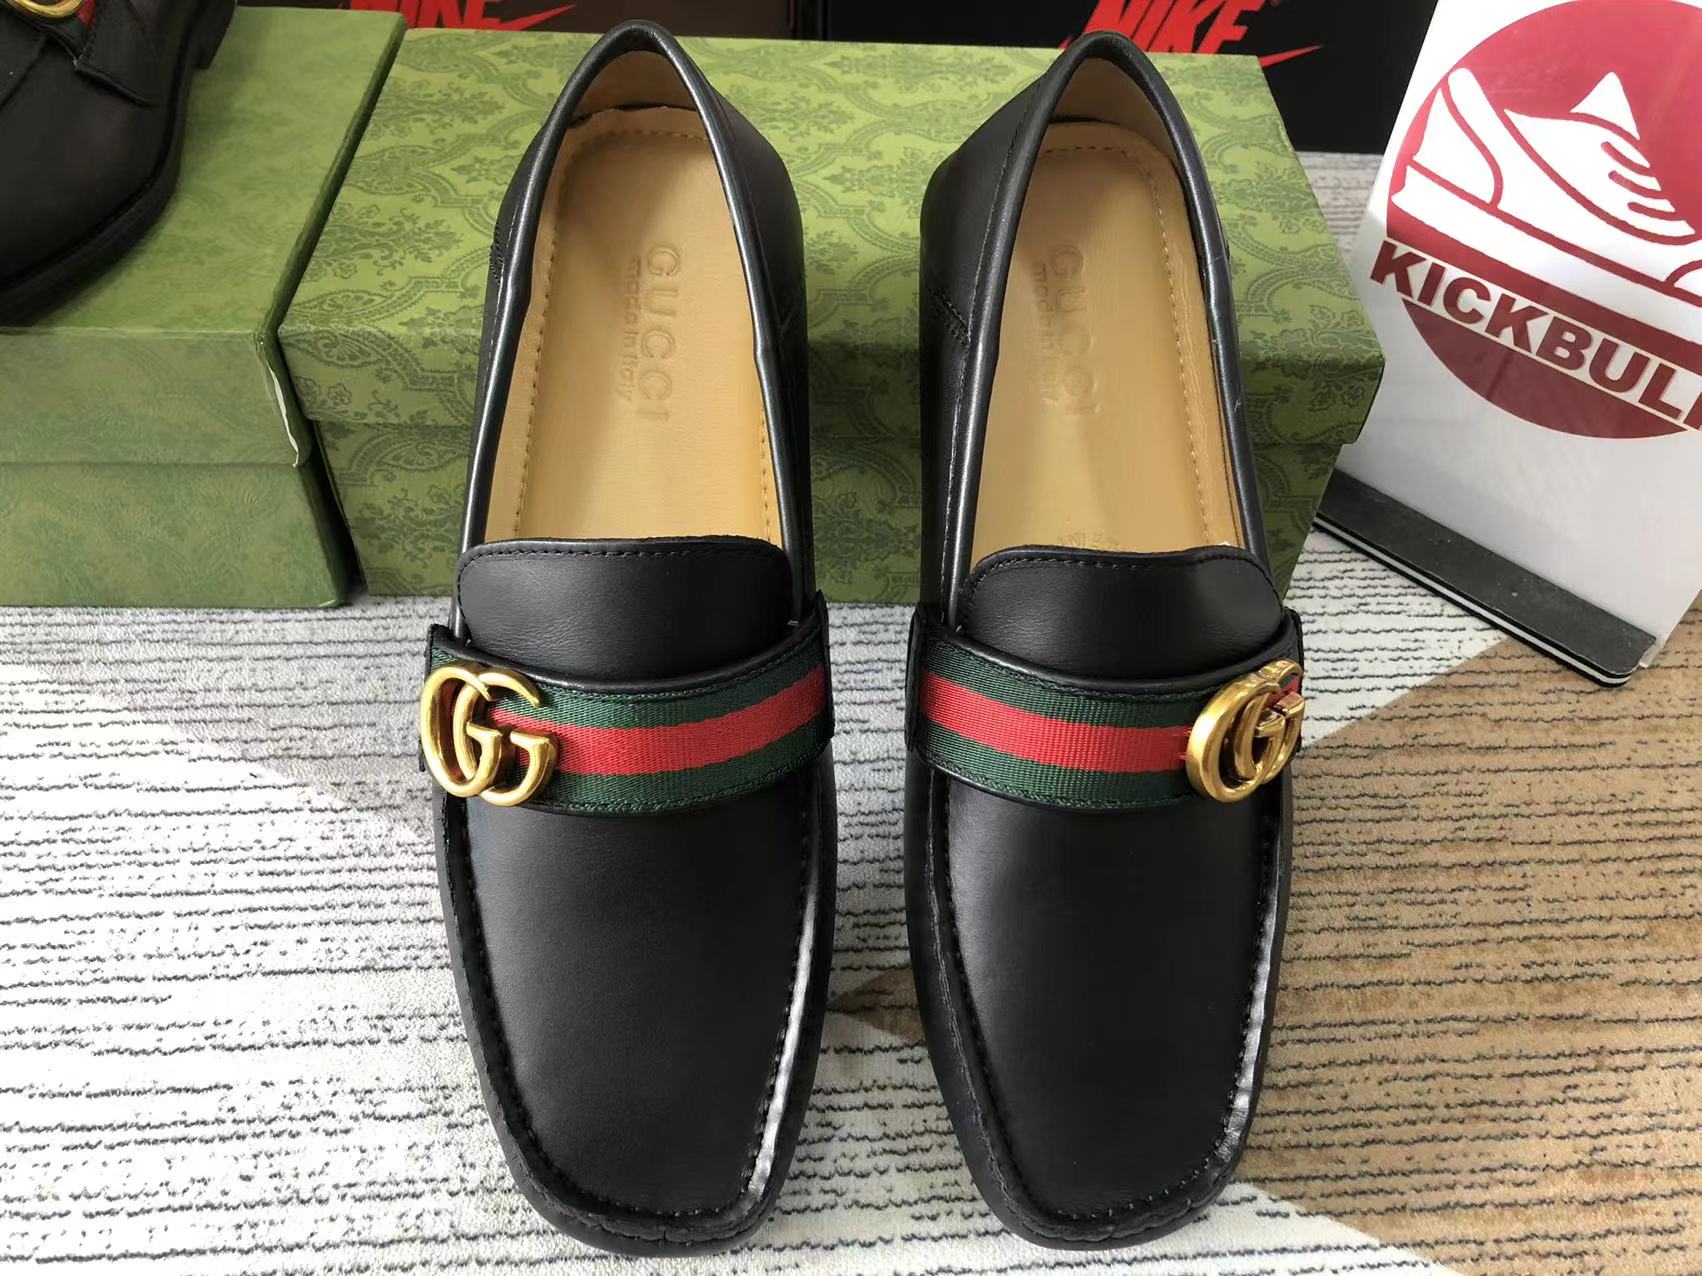 Kickbulk Custom made Gucci leather shoes quality control camera photos ...